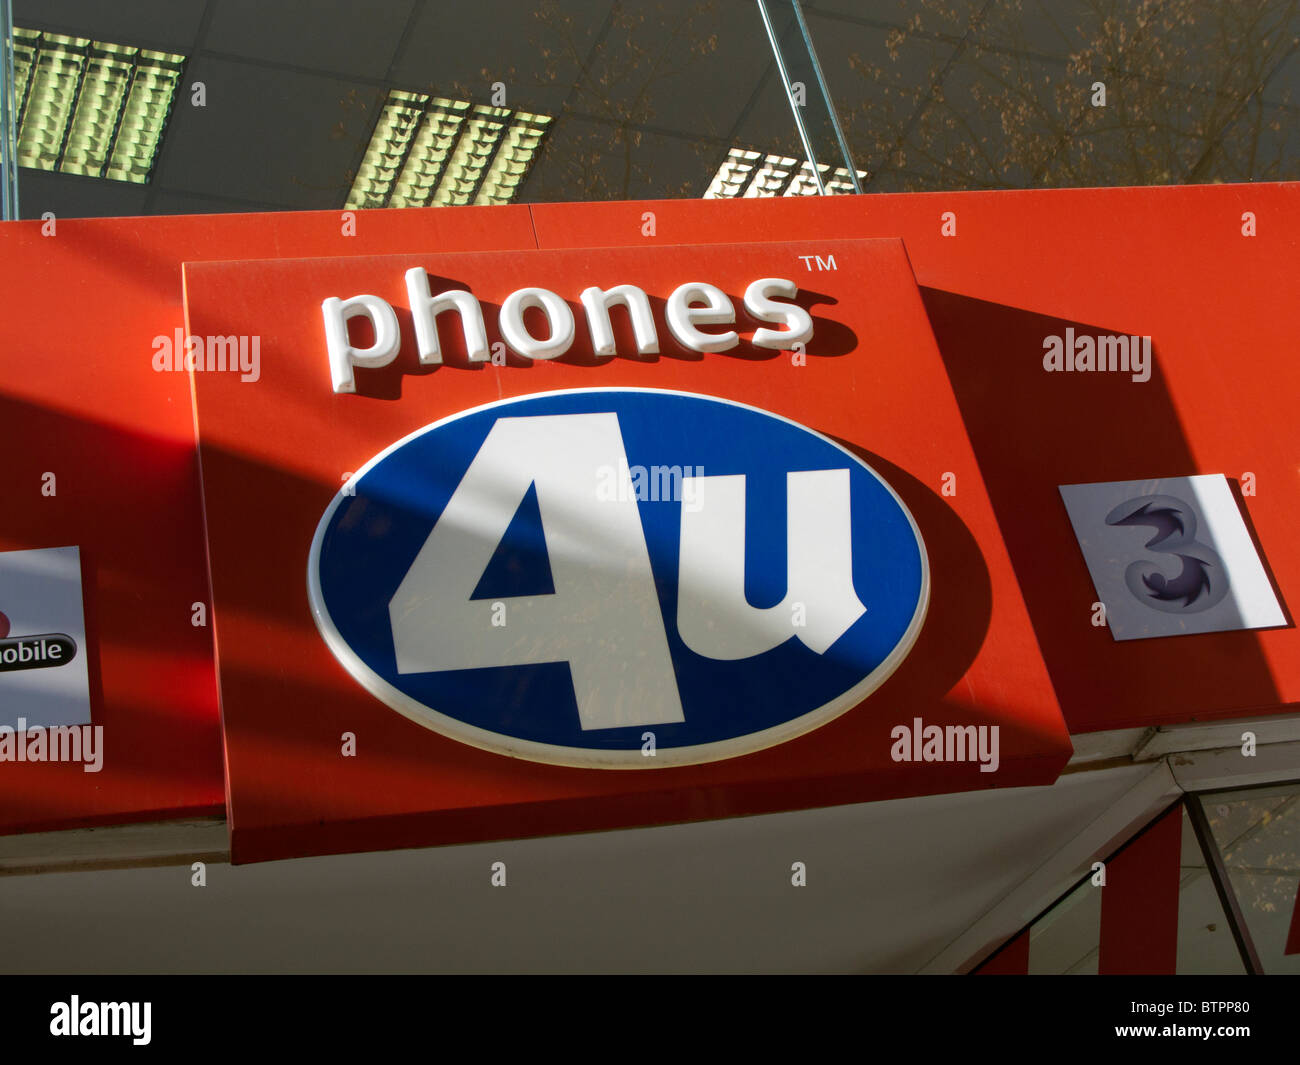 Phones 4u sign and logo Stock Photo